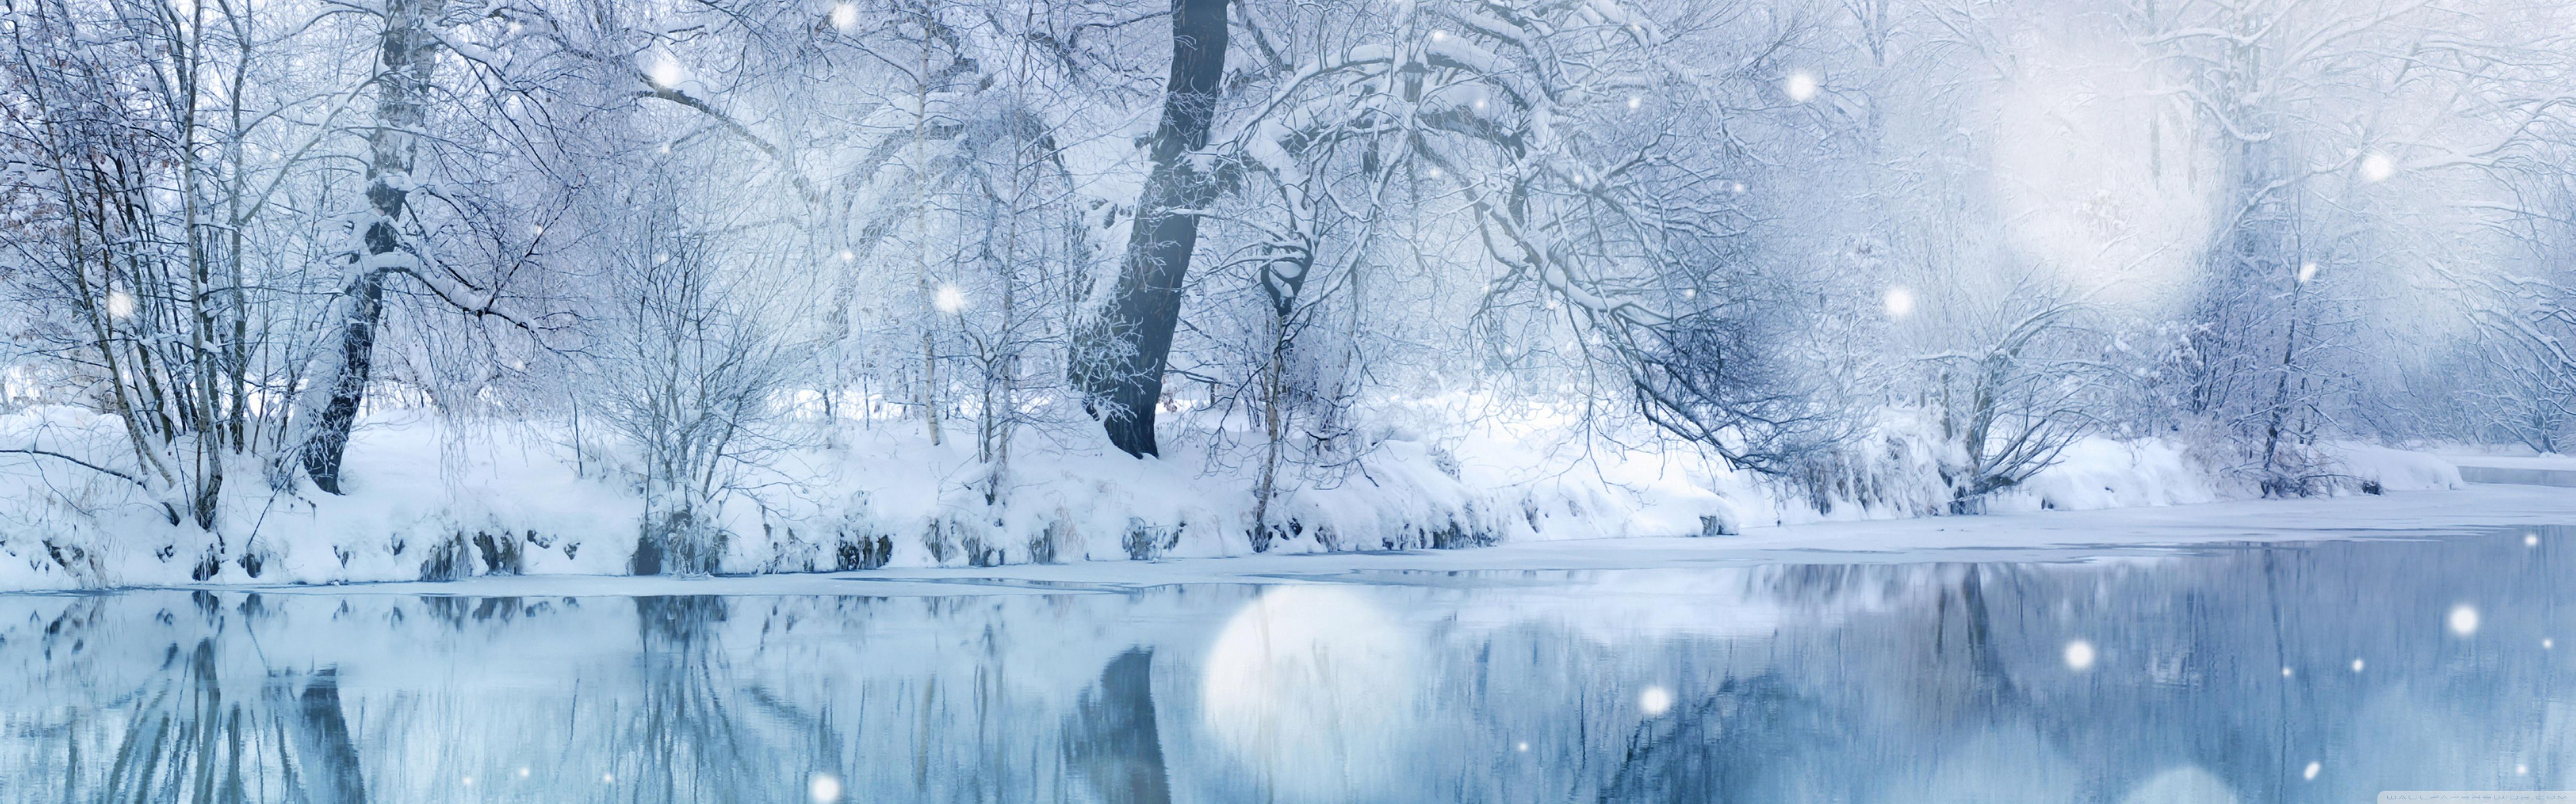 Winter Snowfall Ultra HD Desktop Background Wallpaper For 4k UHD